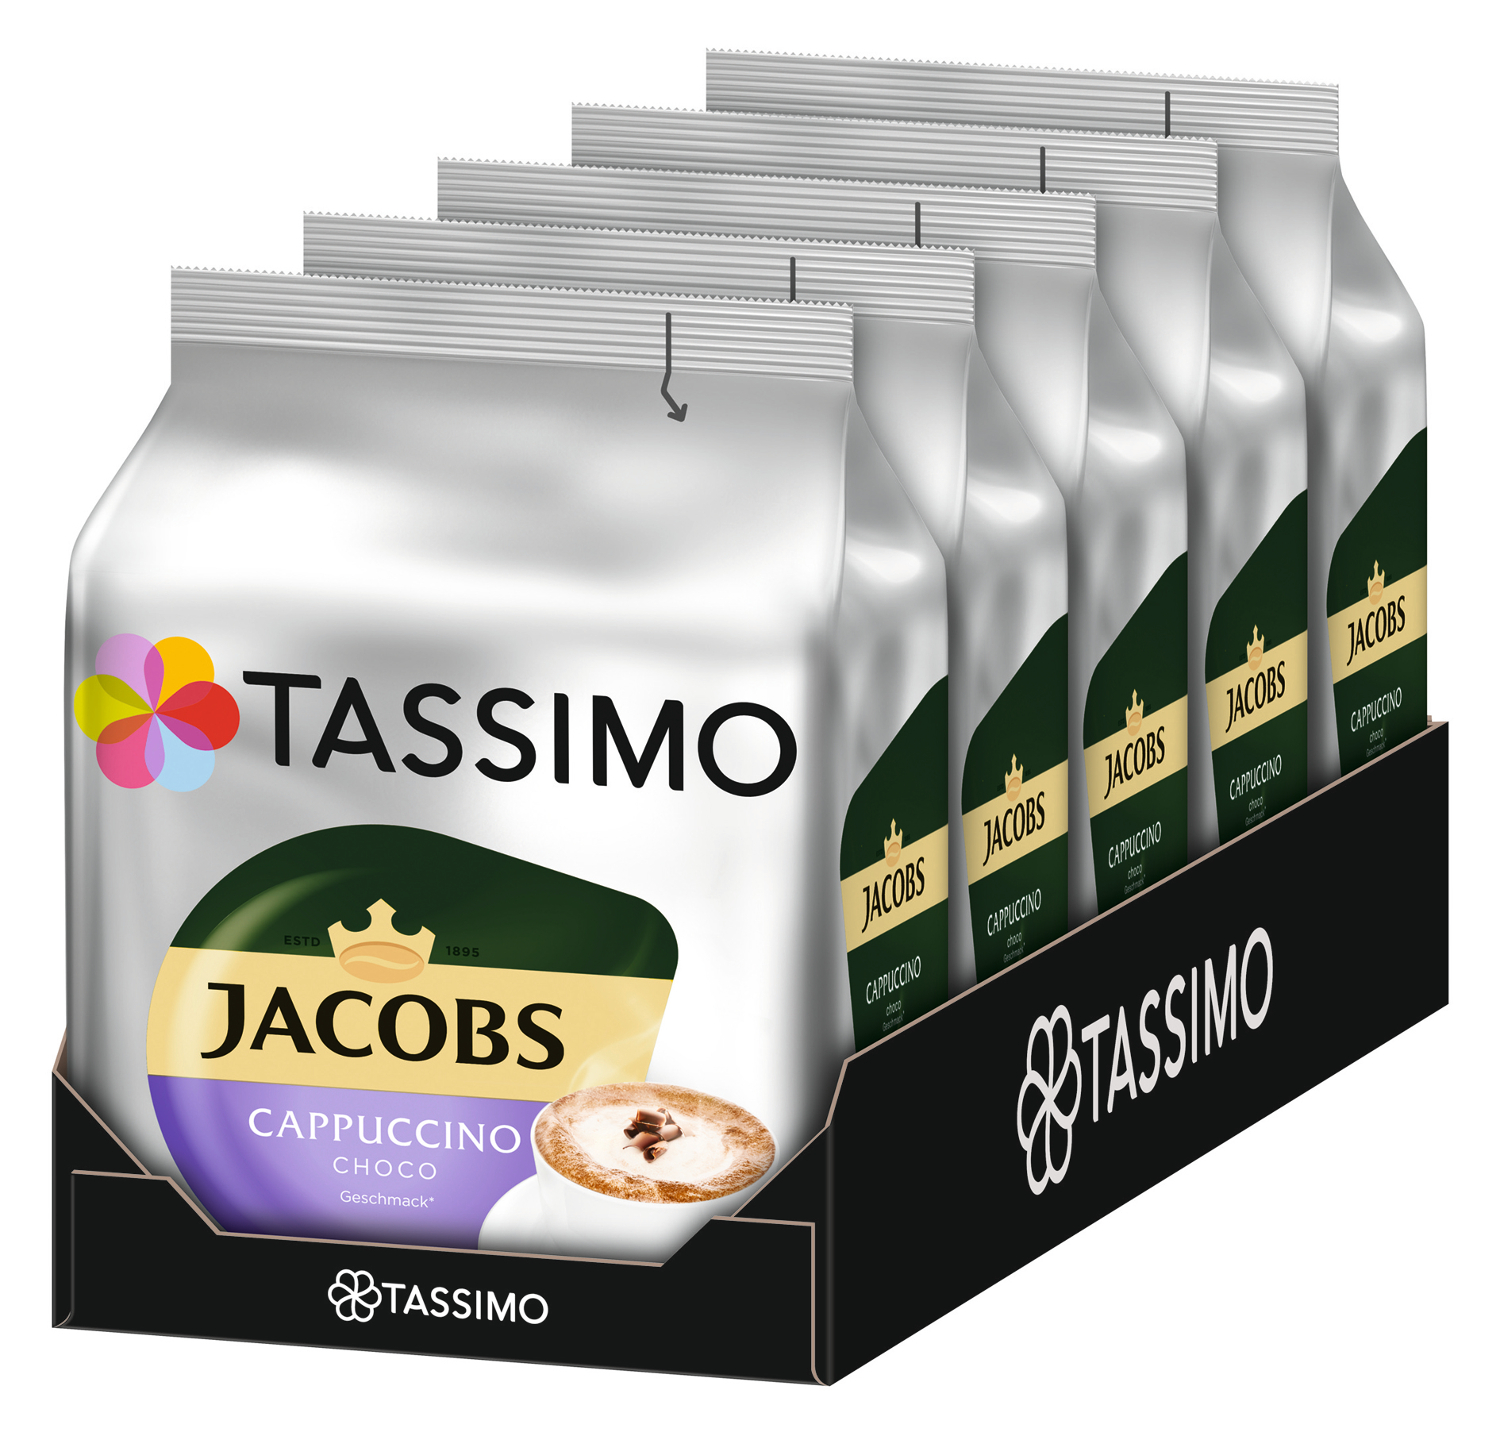 TASSIMO Jacobs Cappuccino 8 x Getränke T Choco Schokogeschmack Kaffeekapseln 5 (T-Disc System)) Disc Maschine (Tassimo